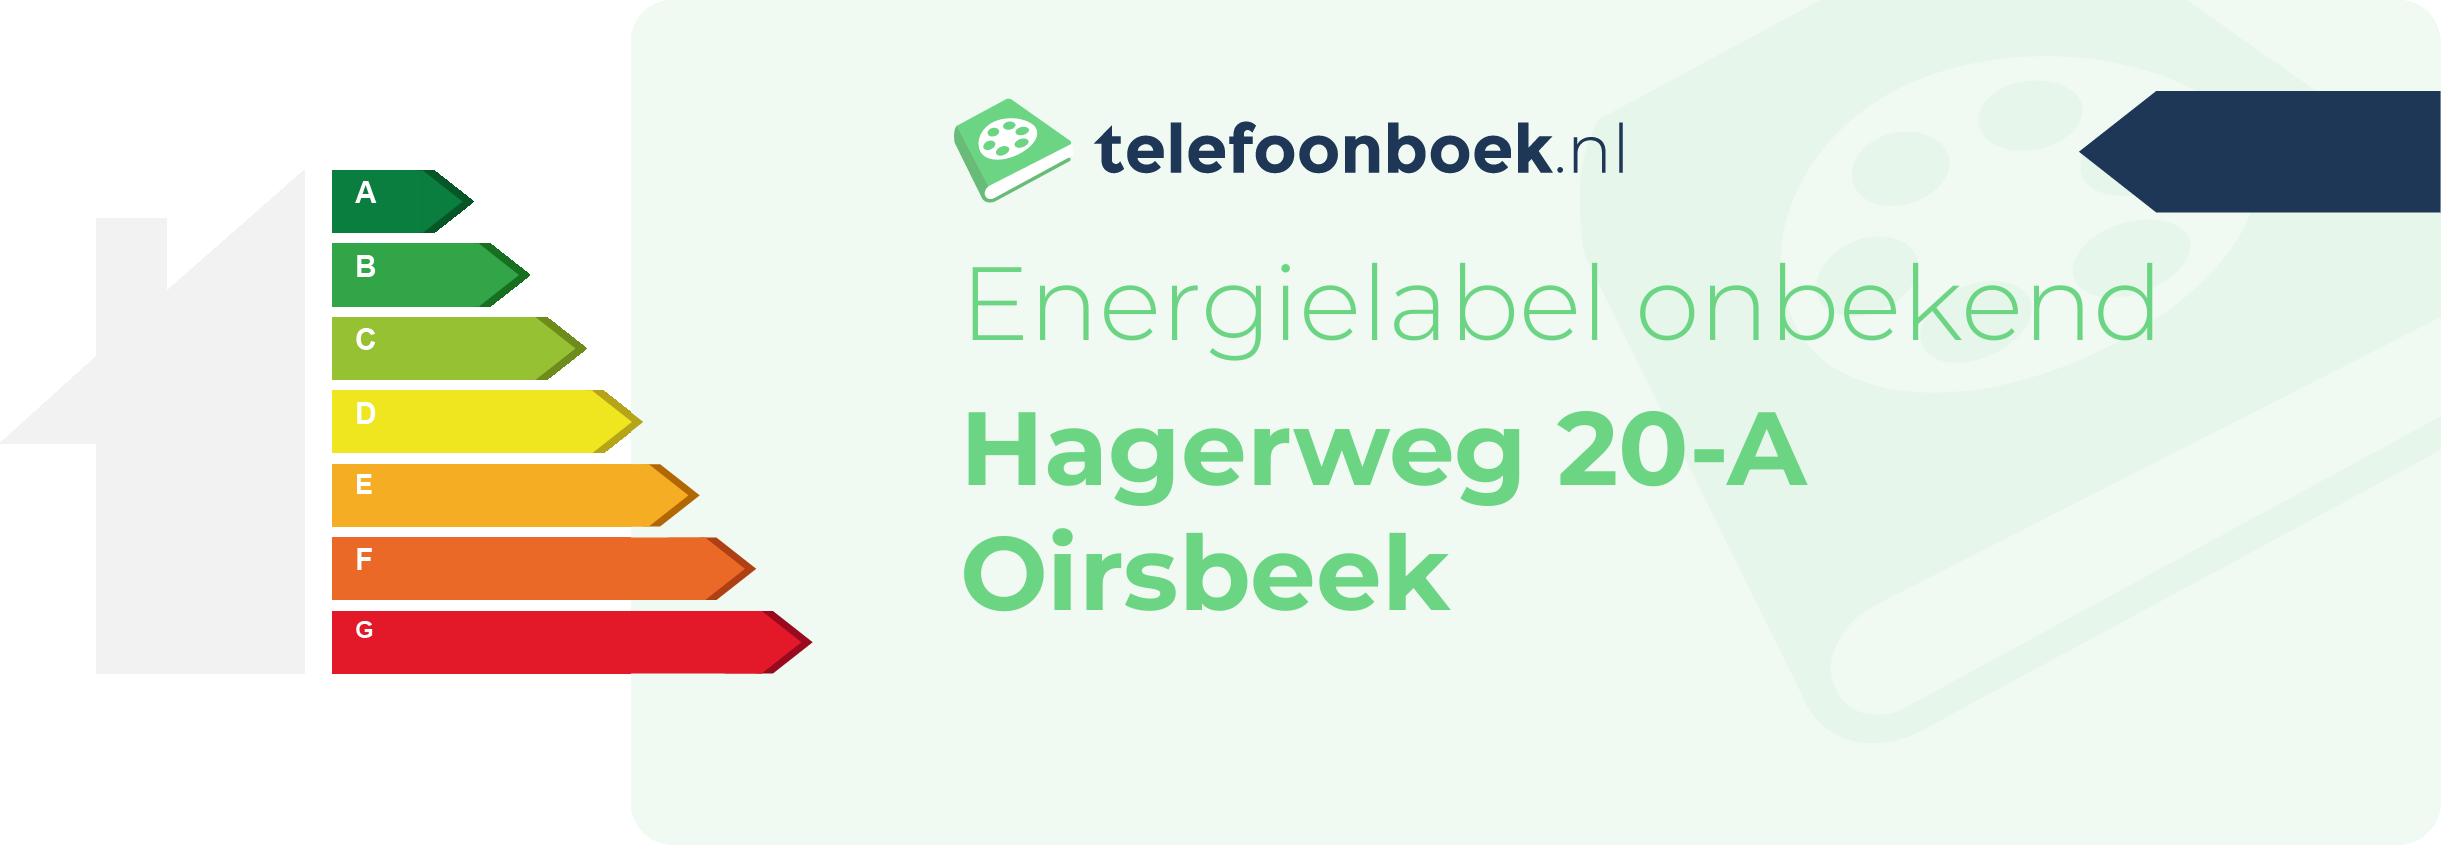 Energielabel Hagerweg 20-A Oirsbeek